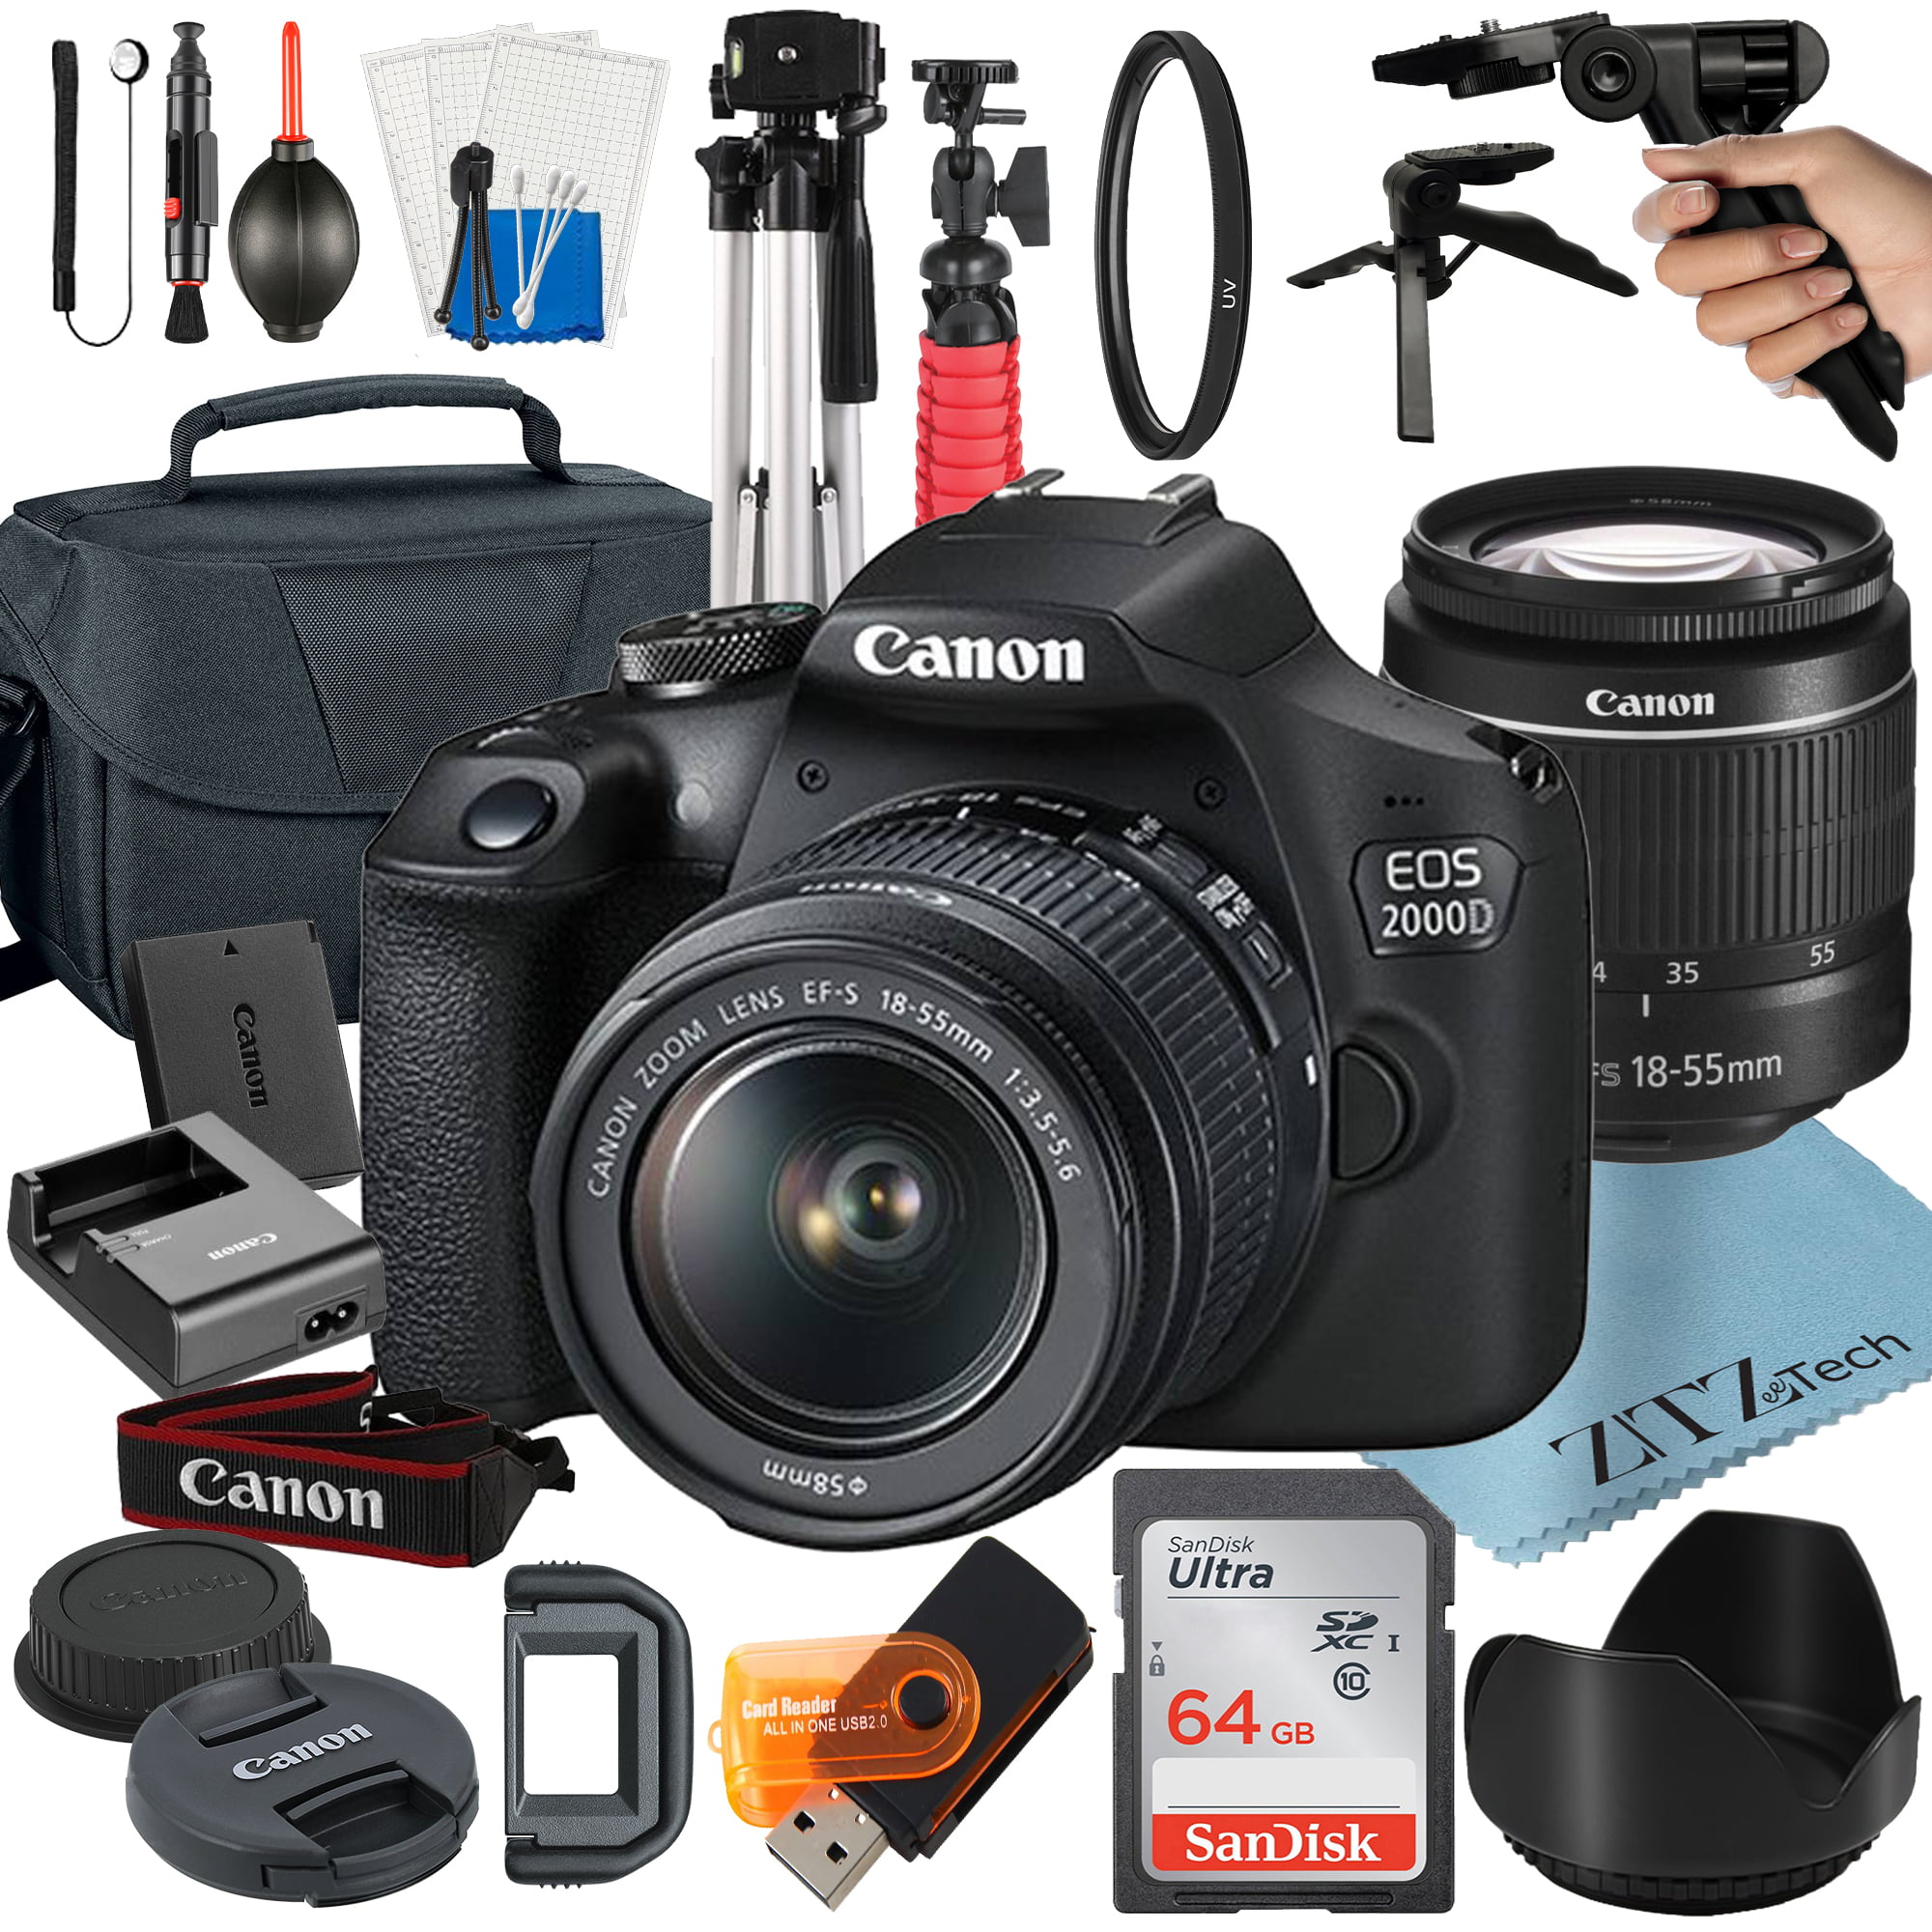 Canon EOS 2000D / Rebel T7 DSLR Camera Bundle with 18-55mm Zoom Lens + 64GB SanDisk Card + Case + Tripod + ZeeTech Accessory